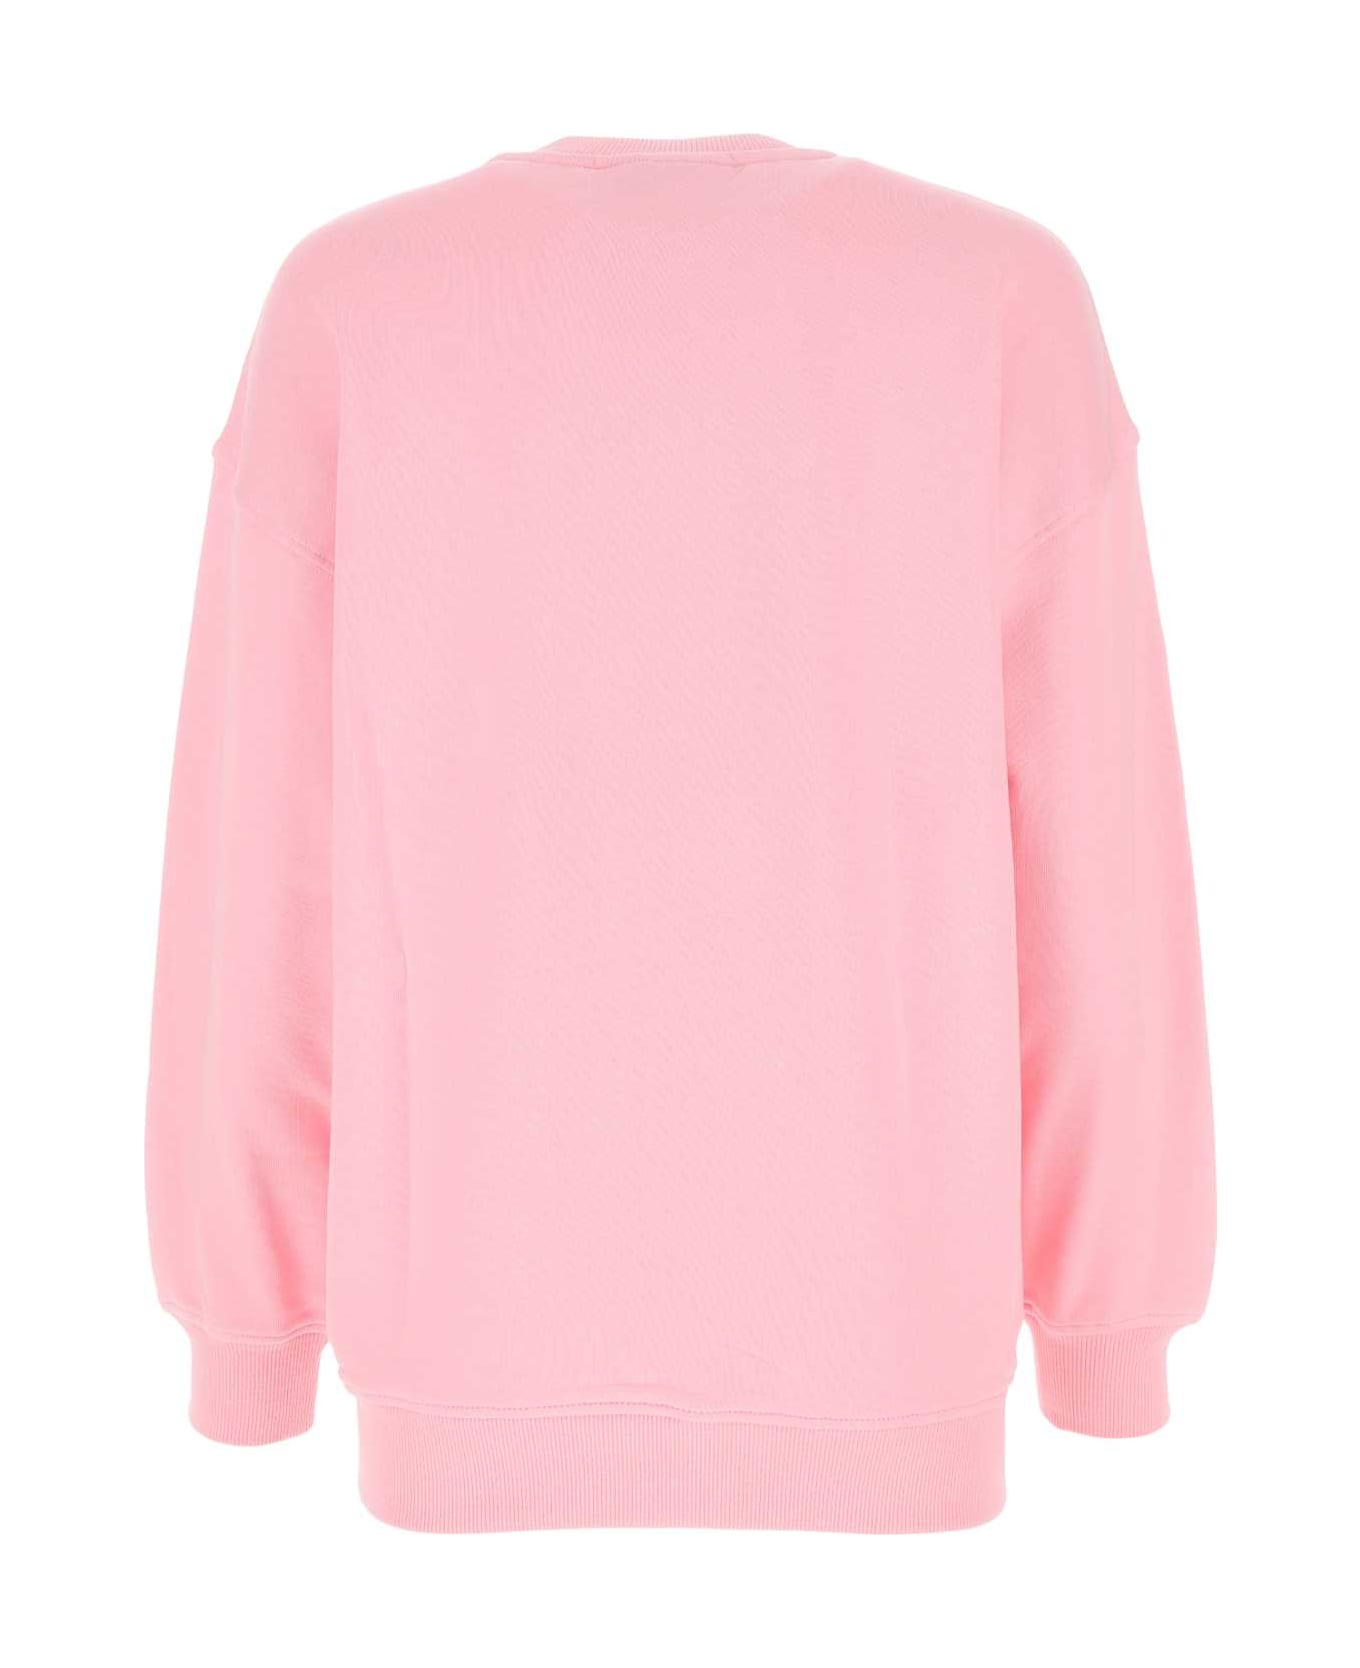 Chiara Ferragni Pink Cotton Sweatshirt - Multicolor